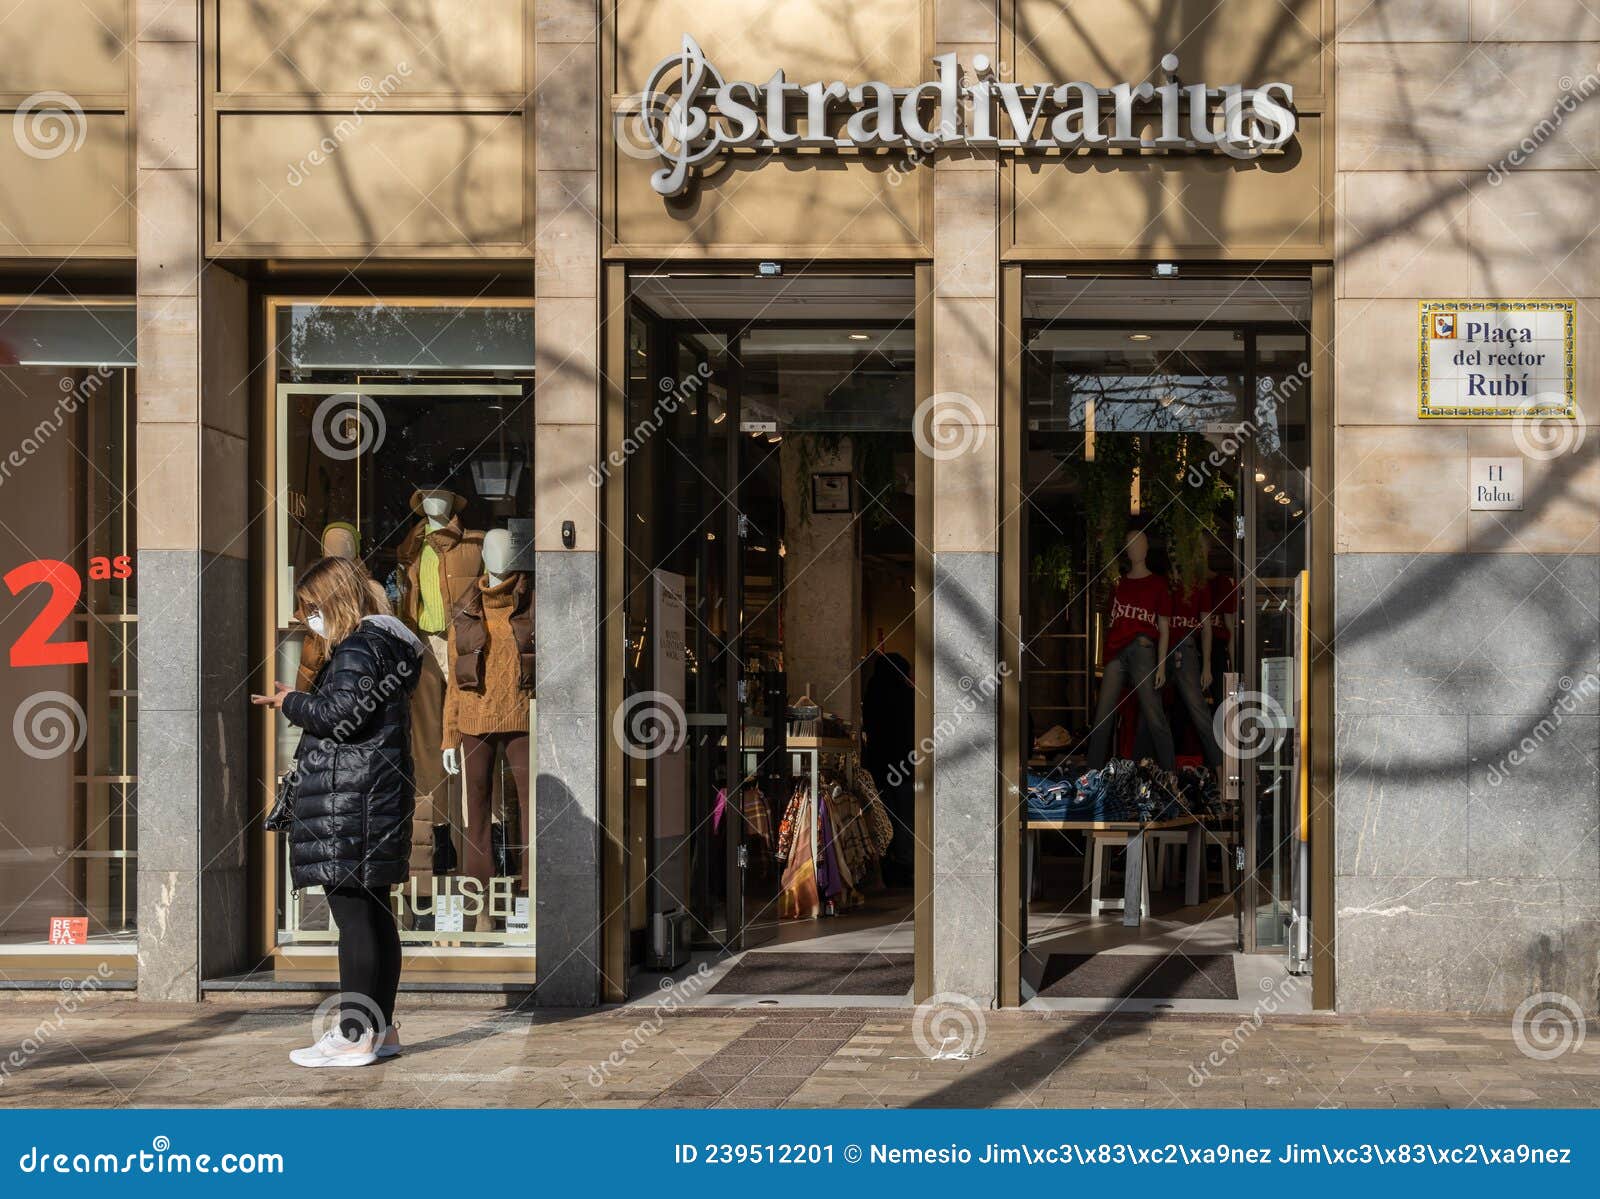 Multinational Clothing Accessories Company Stradivarius Editorial Photo - Image of landmark, industry: 239512201